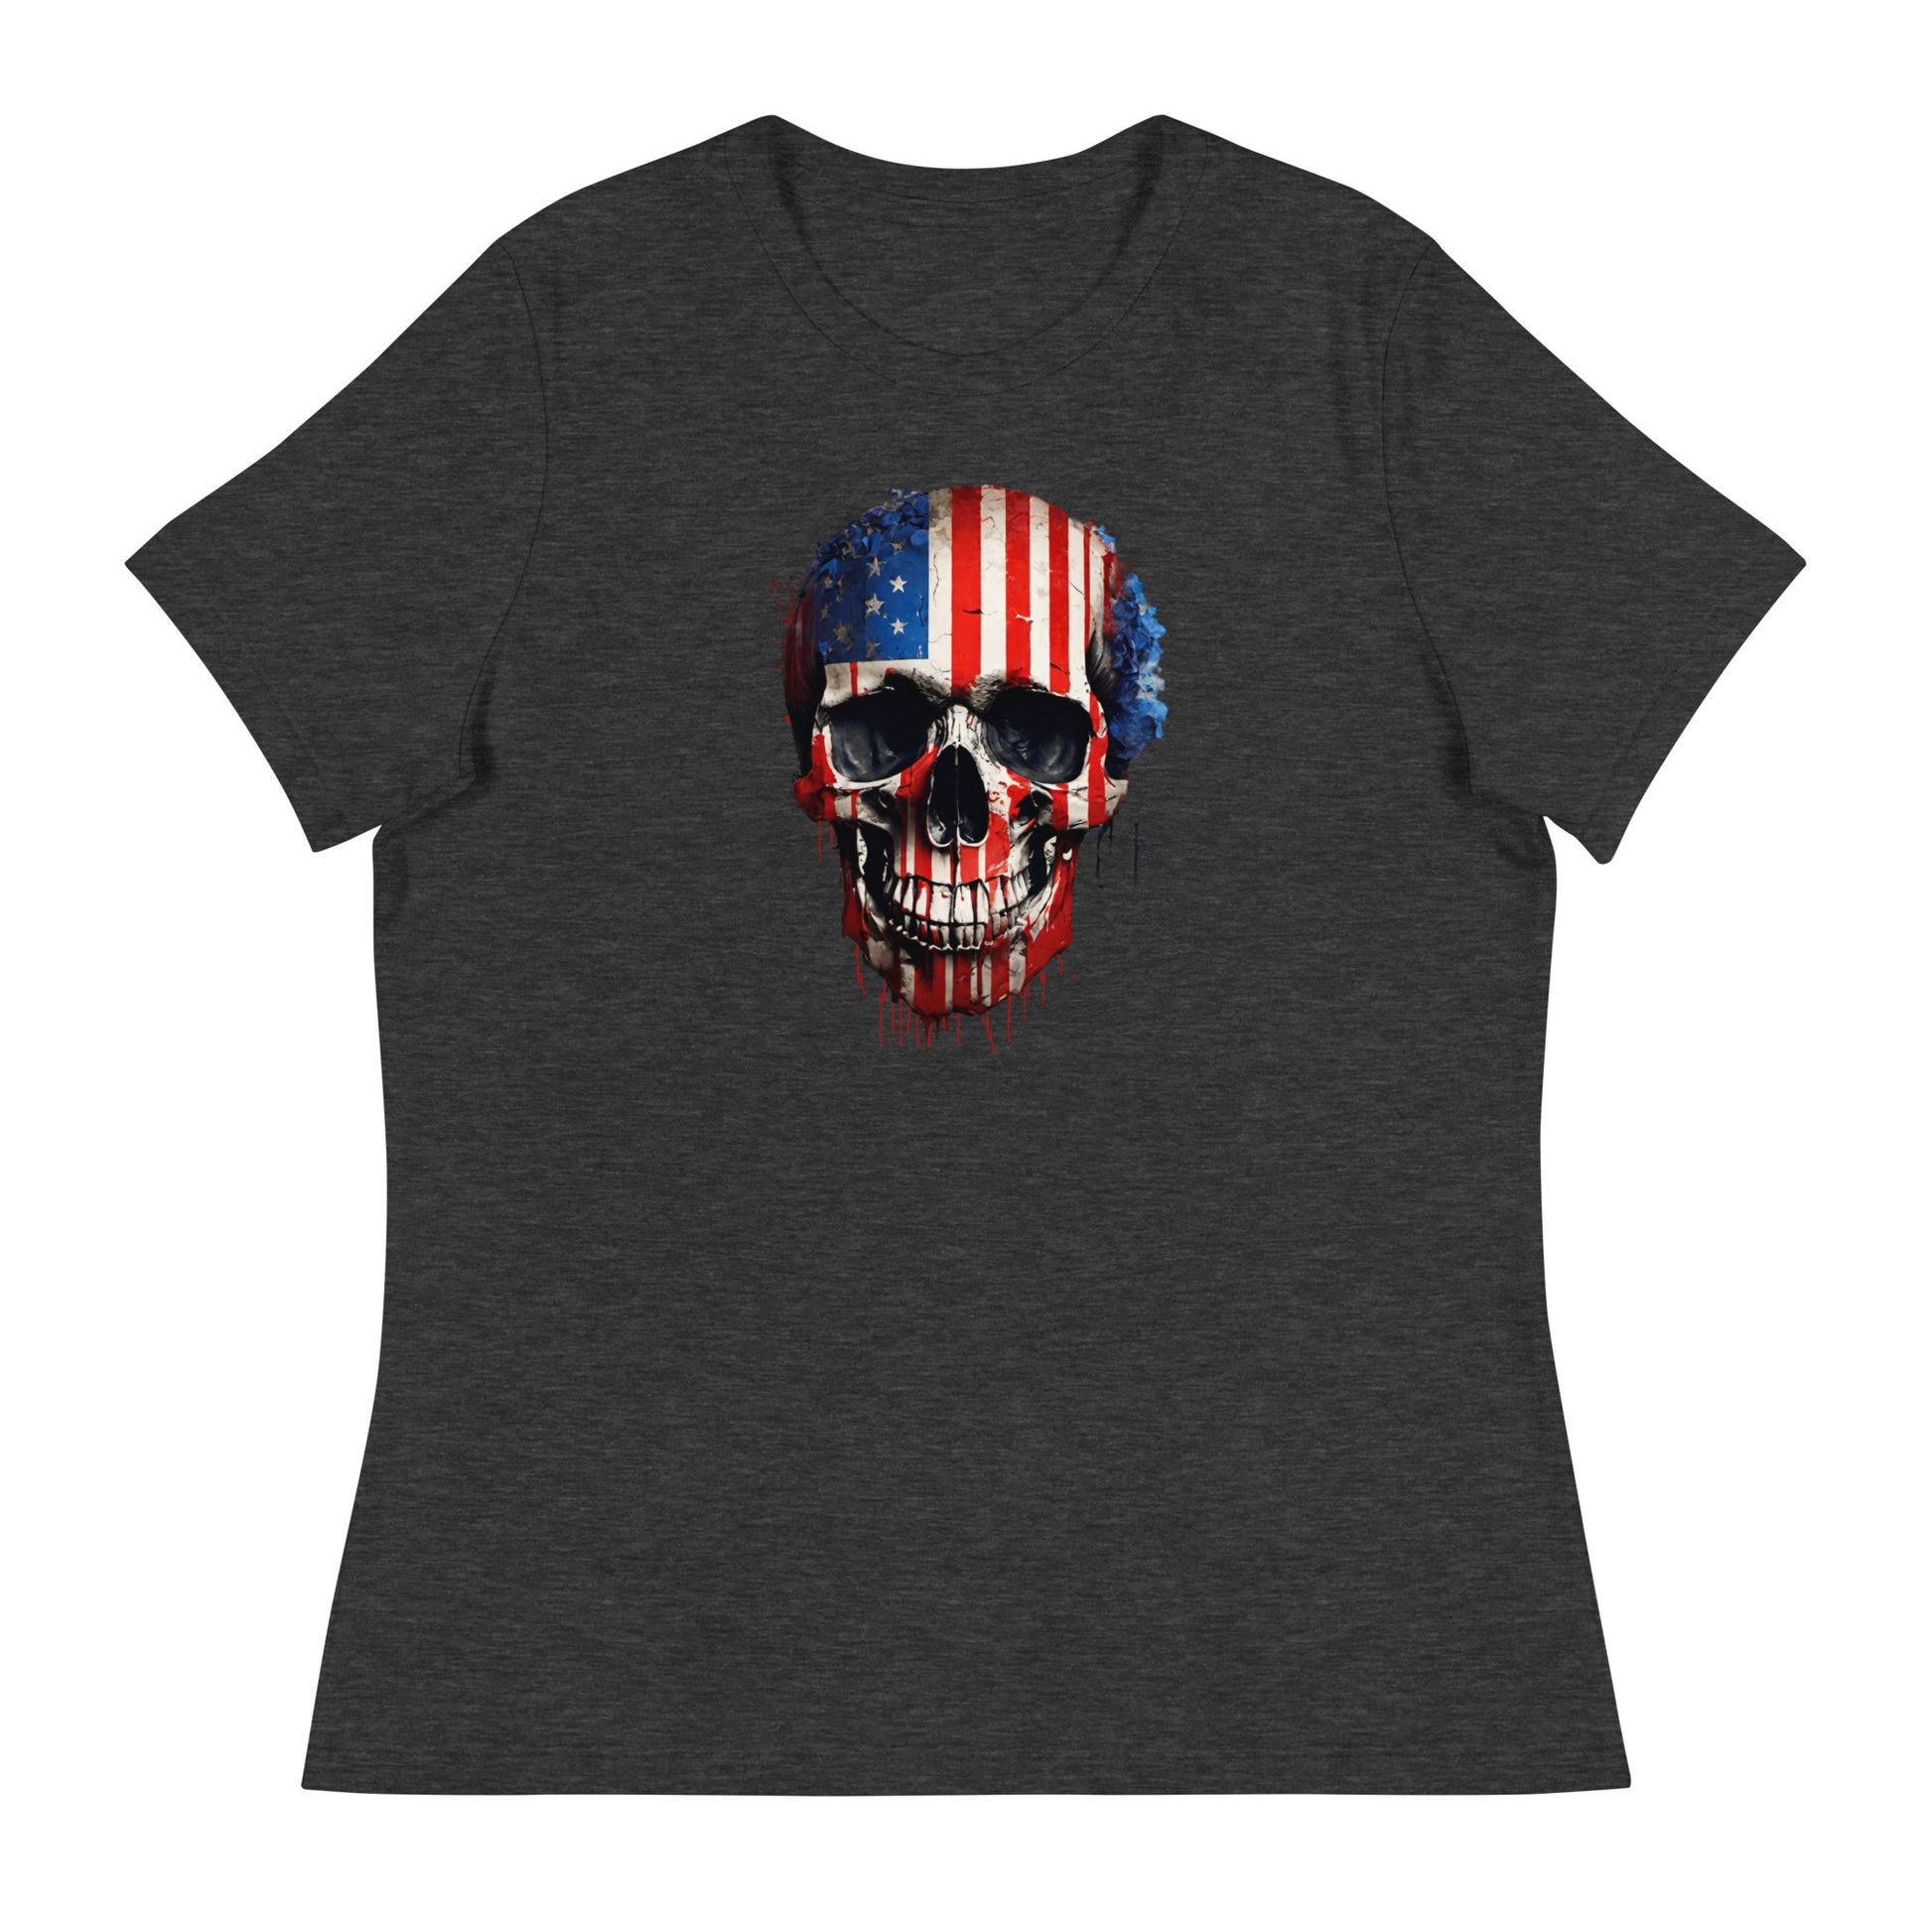 Red, White, & Blue Skull Women's T-Shirt Dark Grey Heather